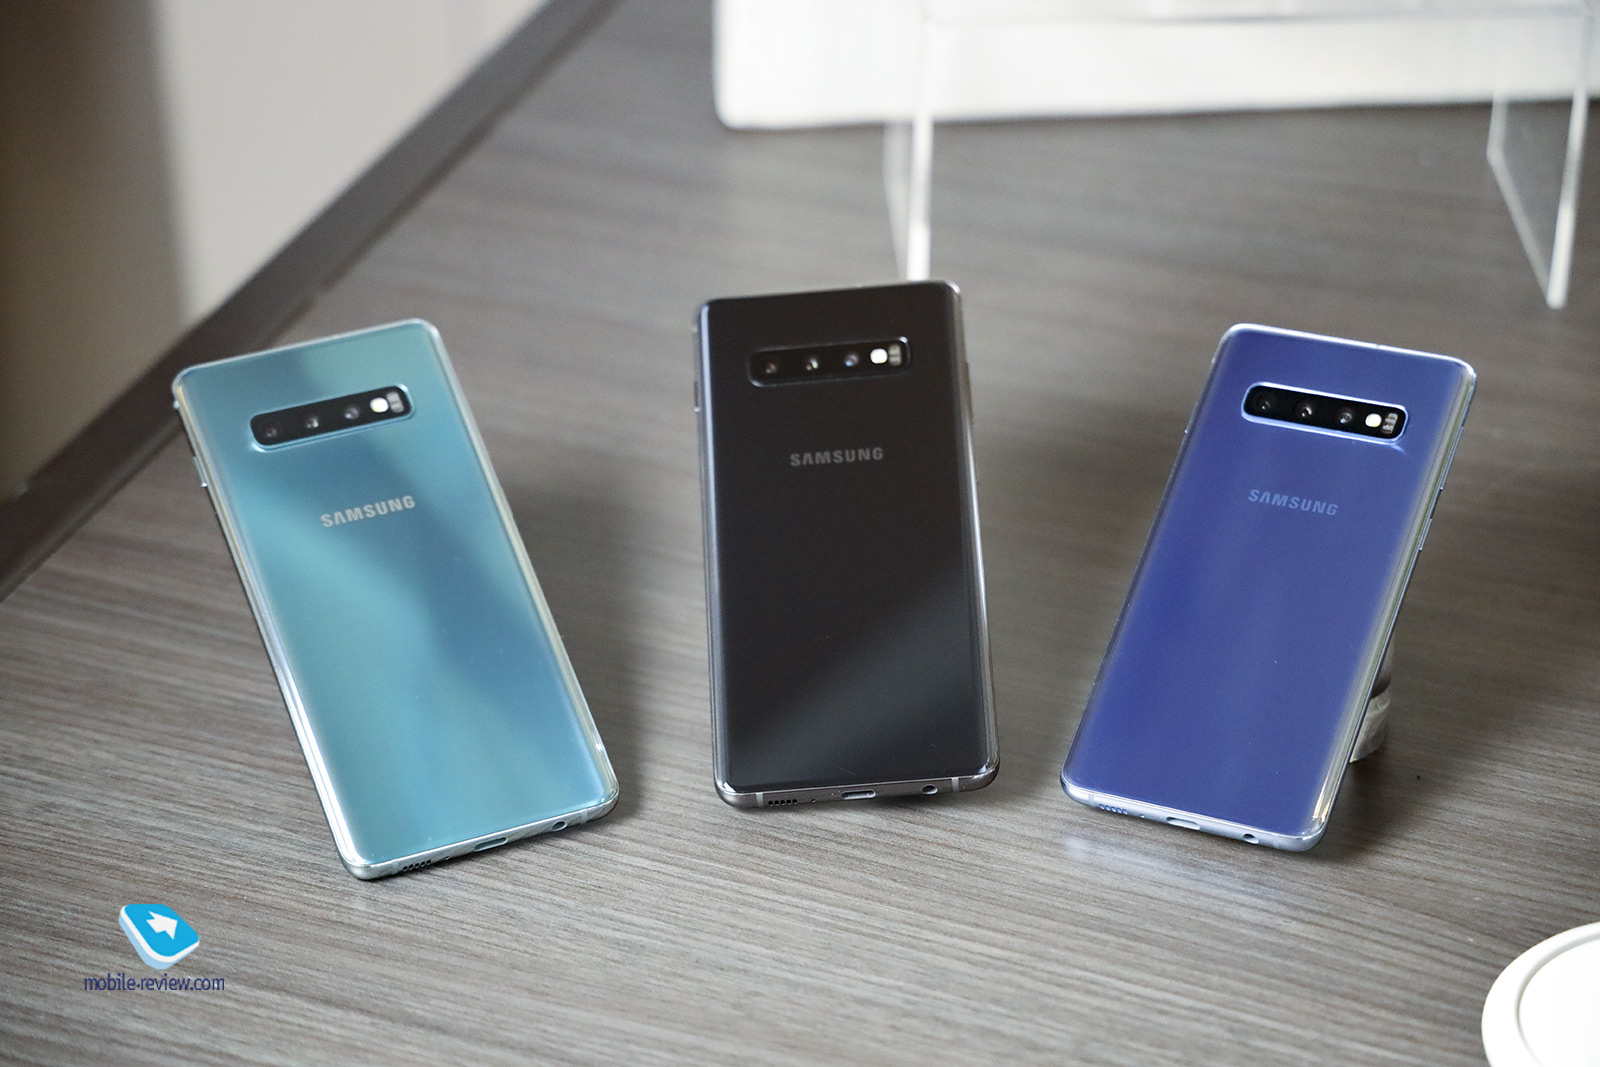 Samsung Galaxy S10/S10+ (SM-G970F/G975F)